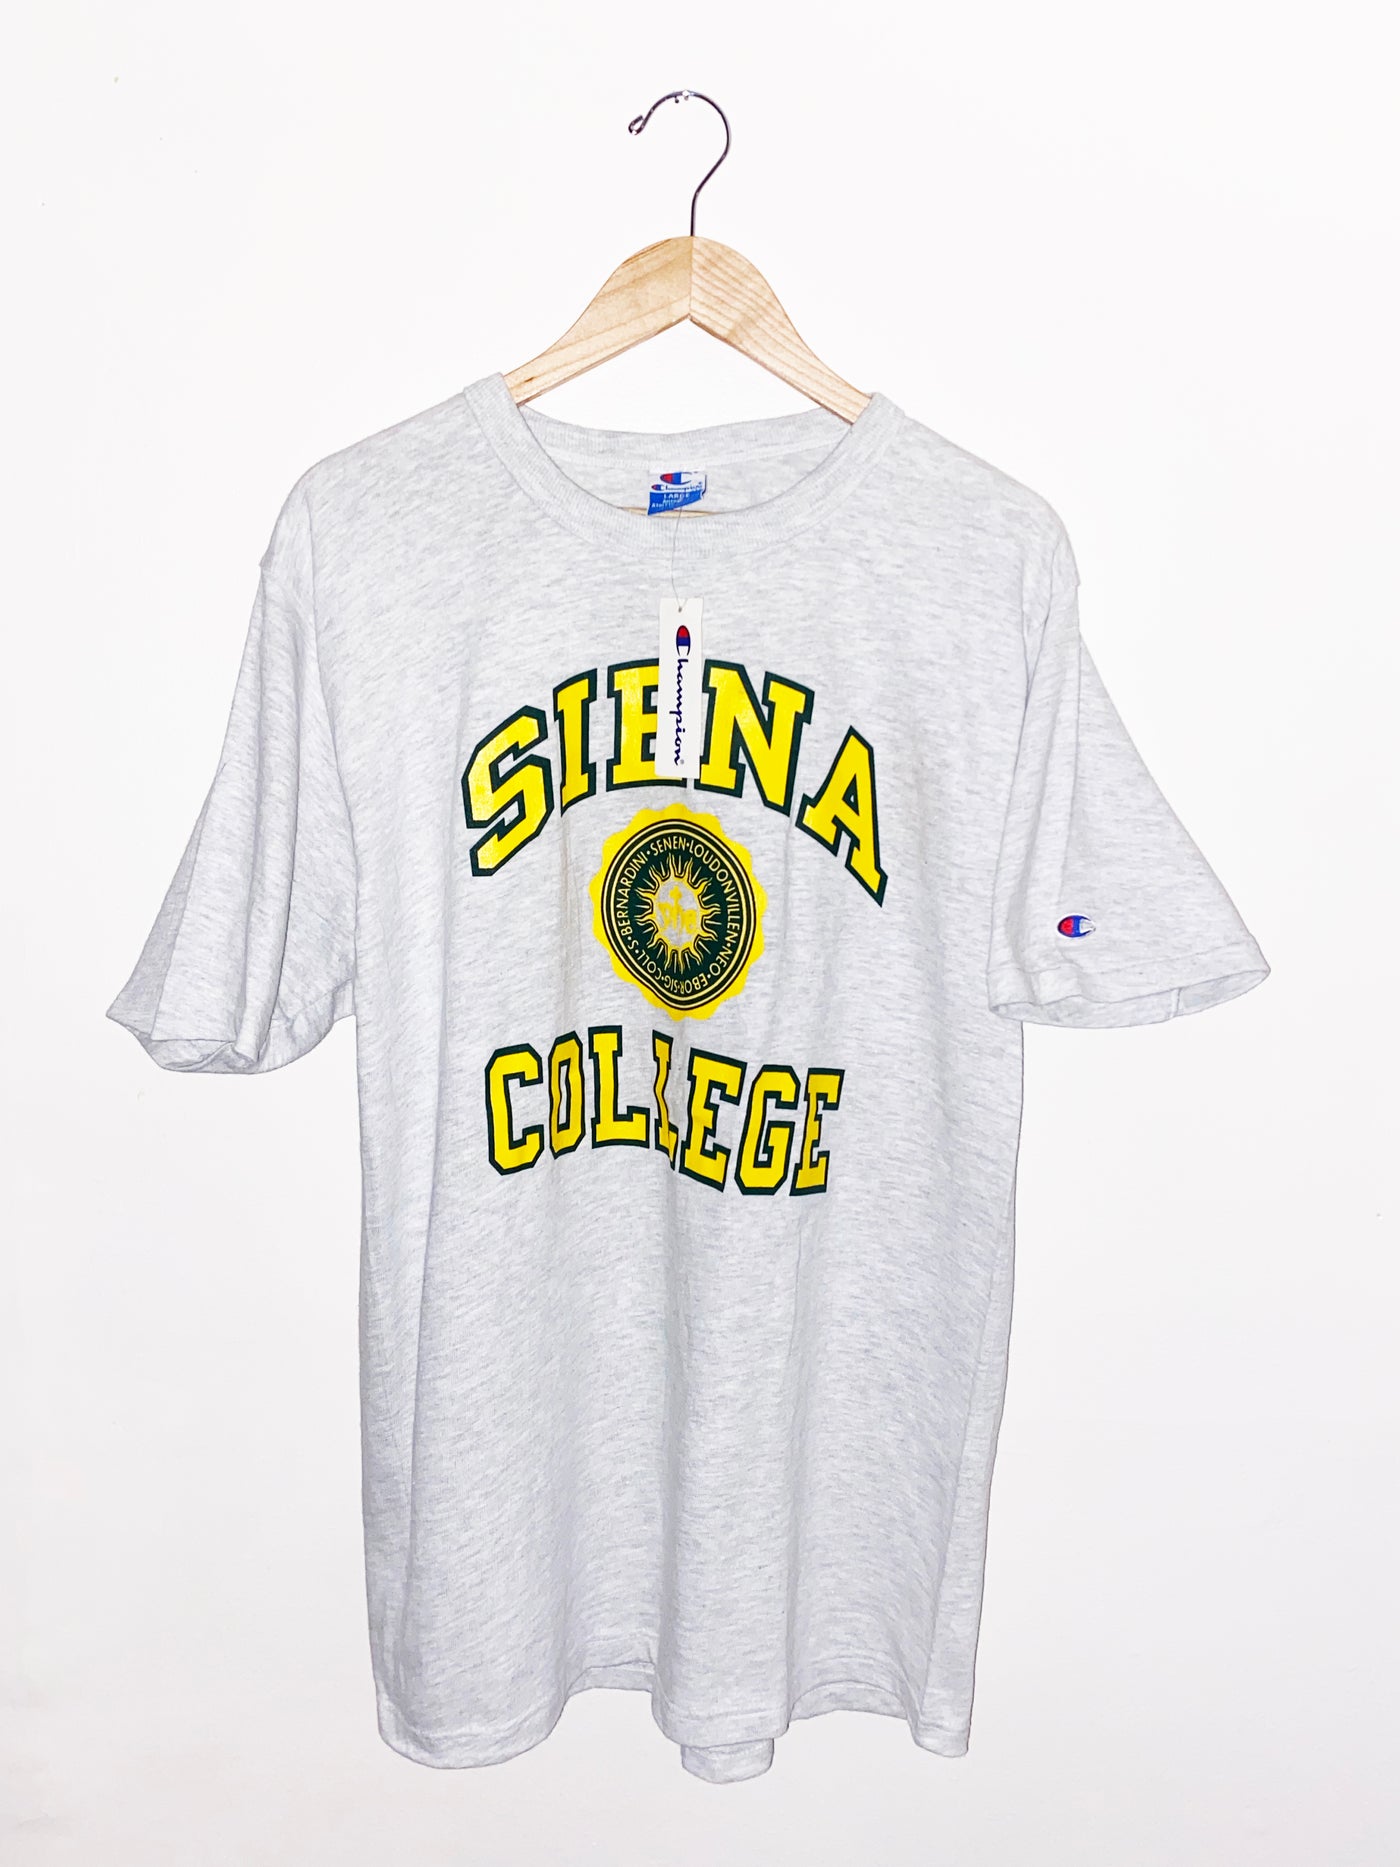 Vintage Champion Siena College T-Shirt